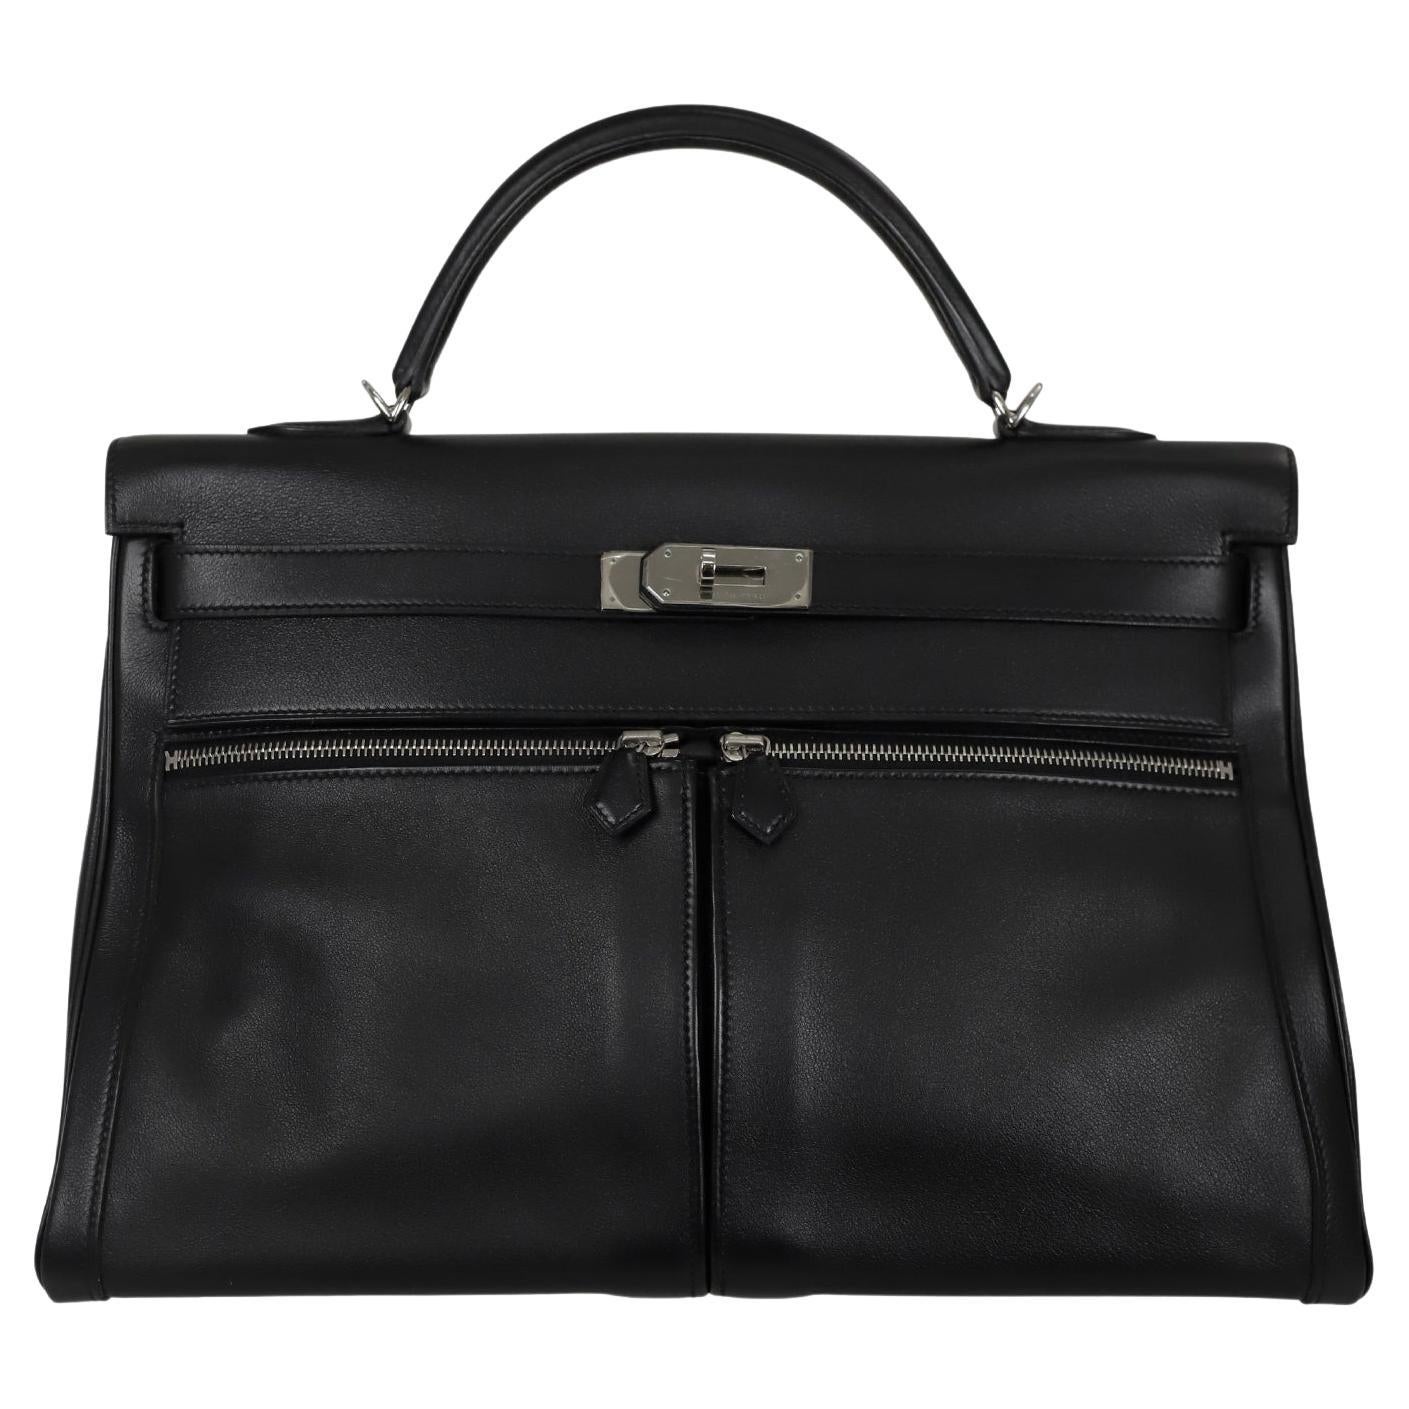 Rare 2012 Hermes Black Swift Leather Kelly Lakis Bag